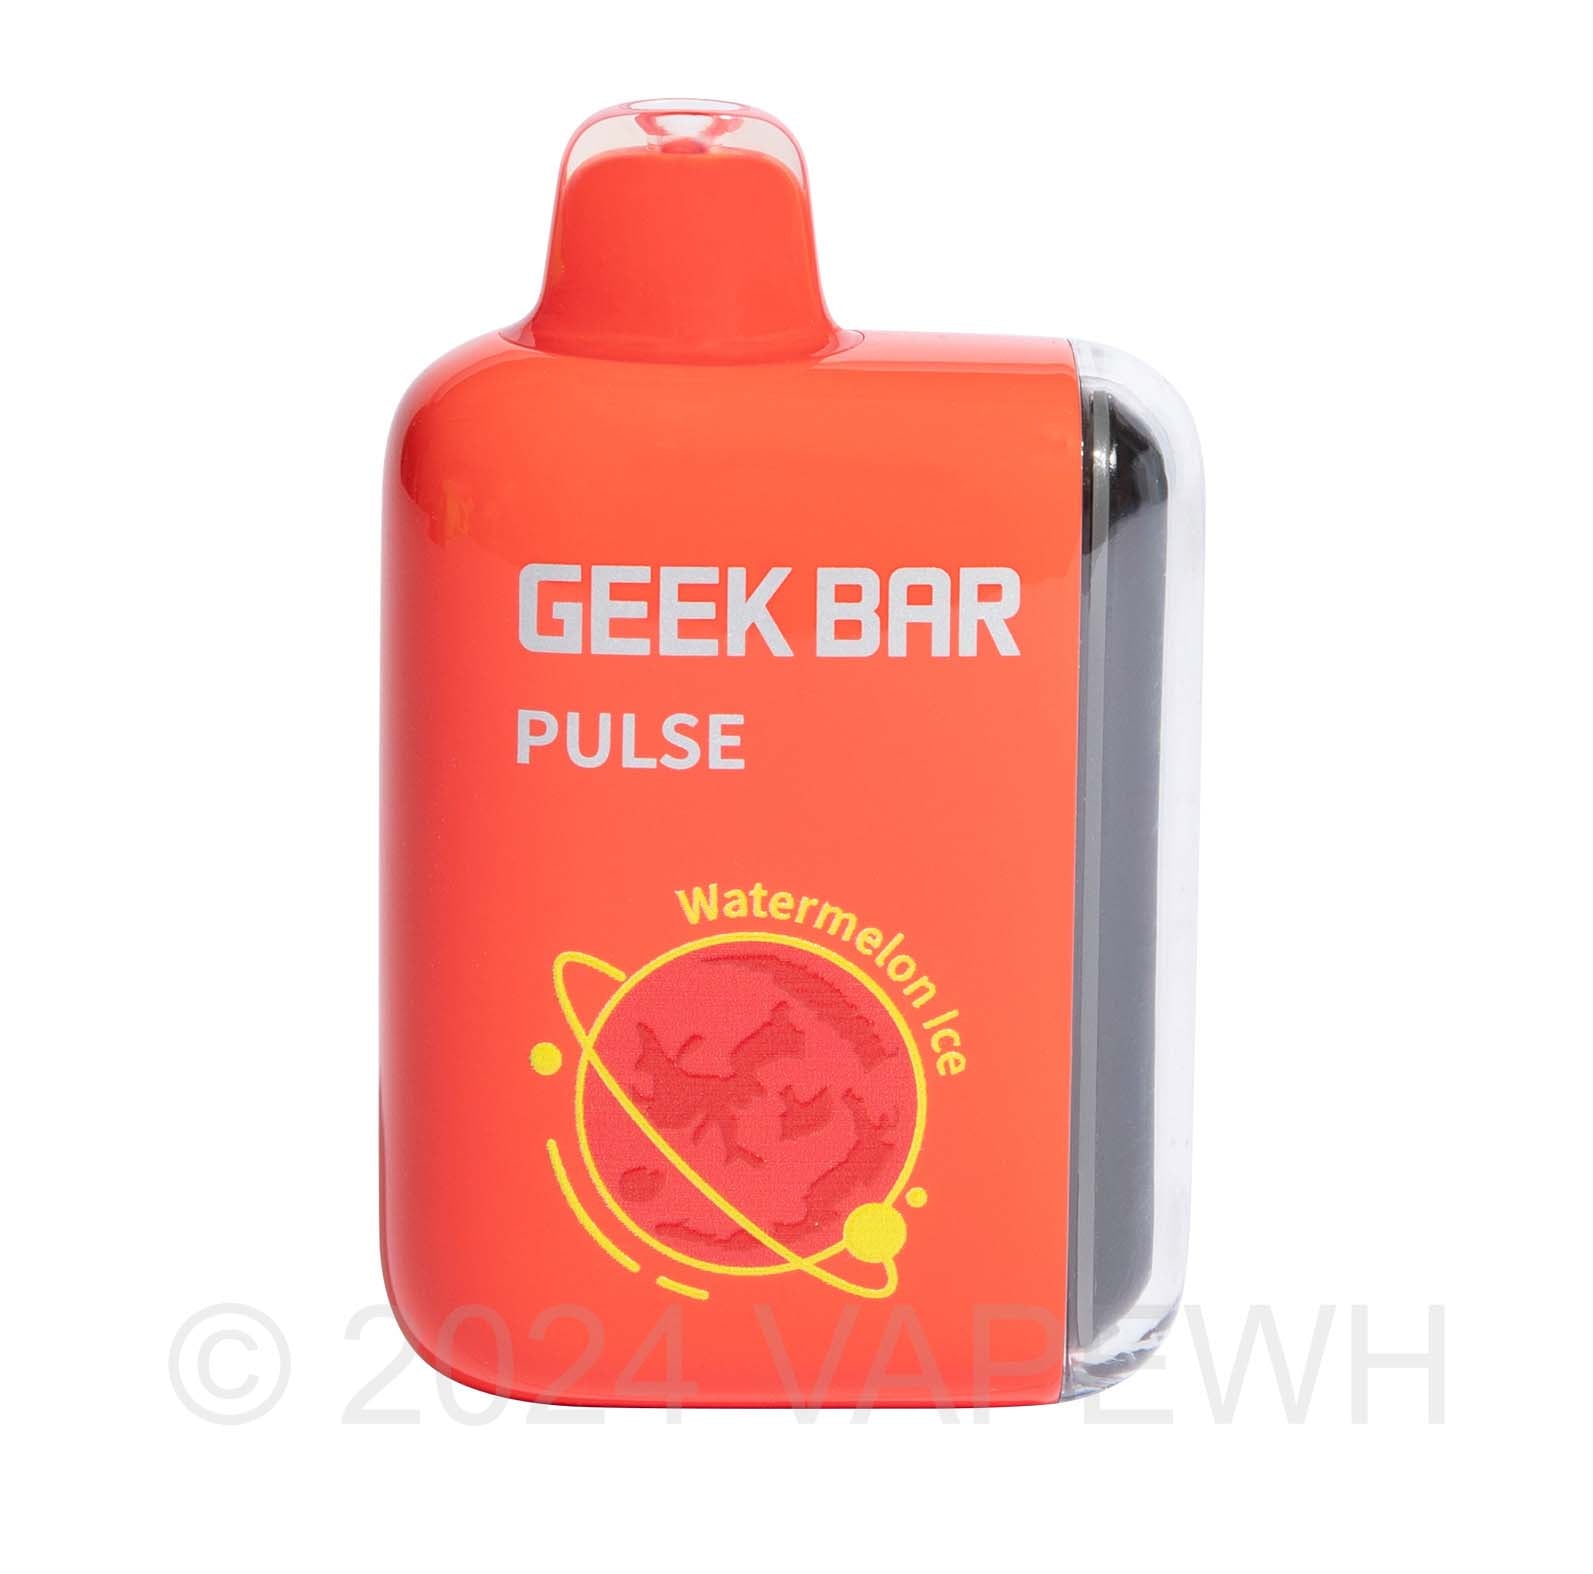 Geek Bar Pulse - Watermelon Ice